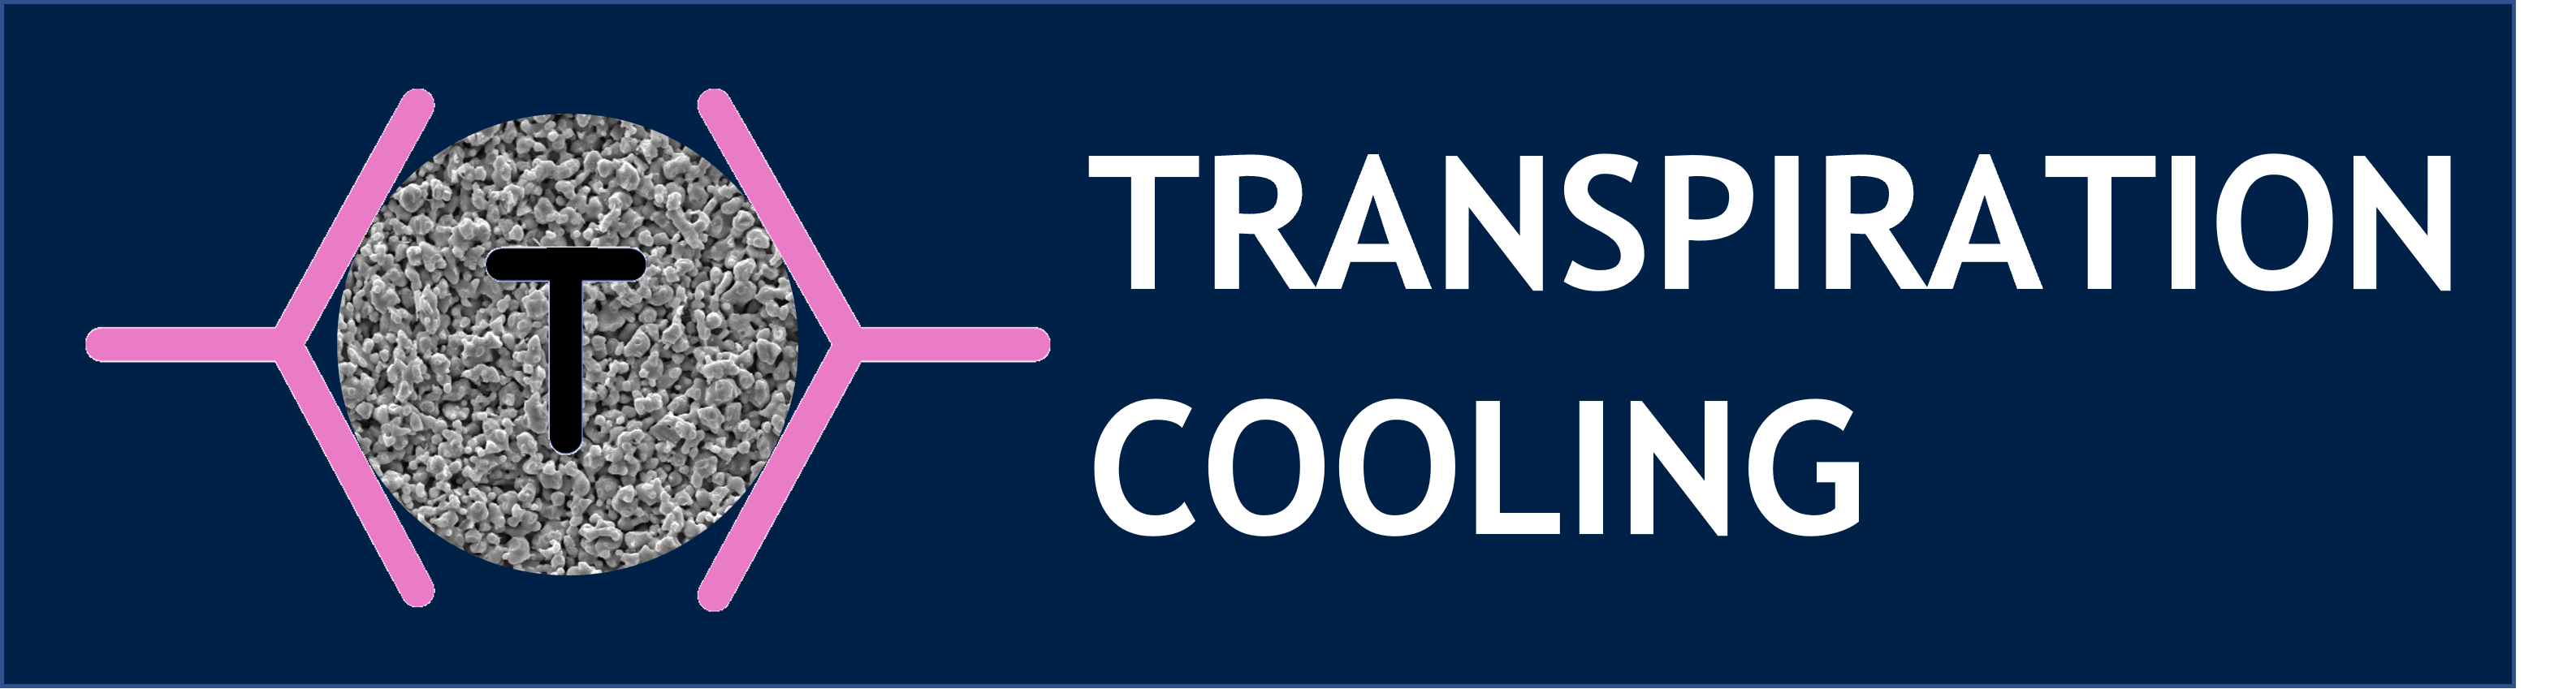 Transpiration Cooling logo